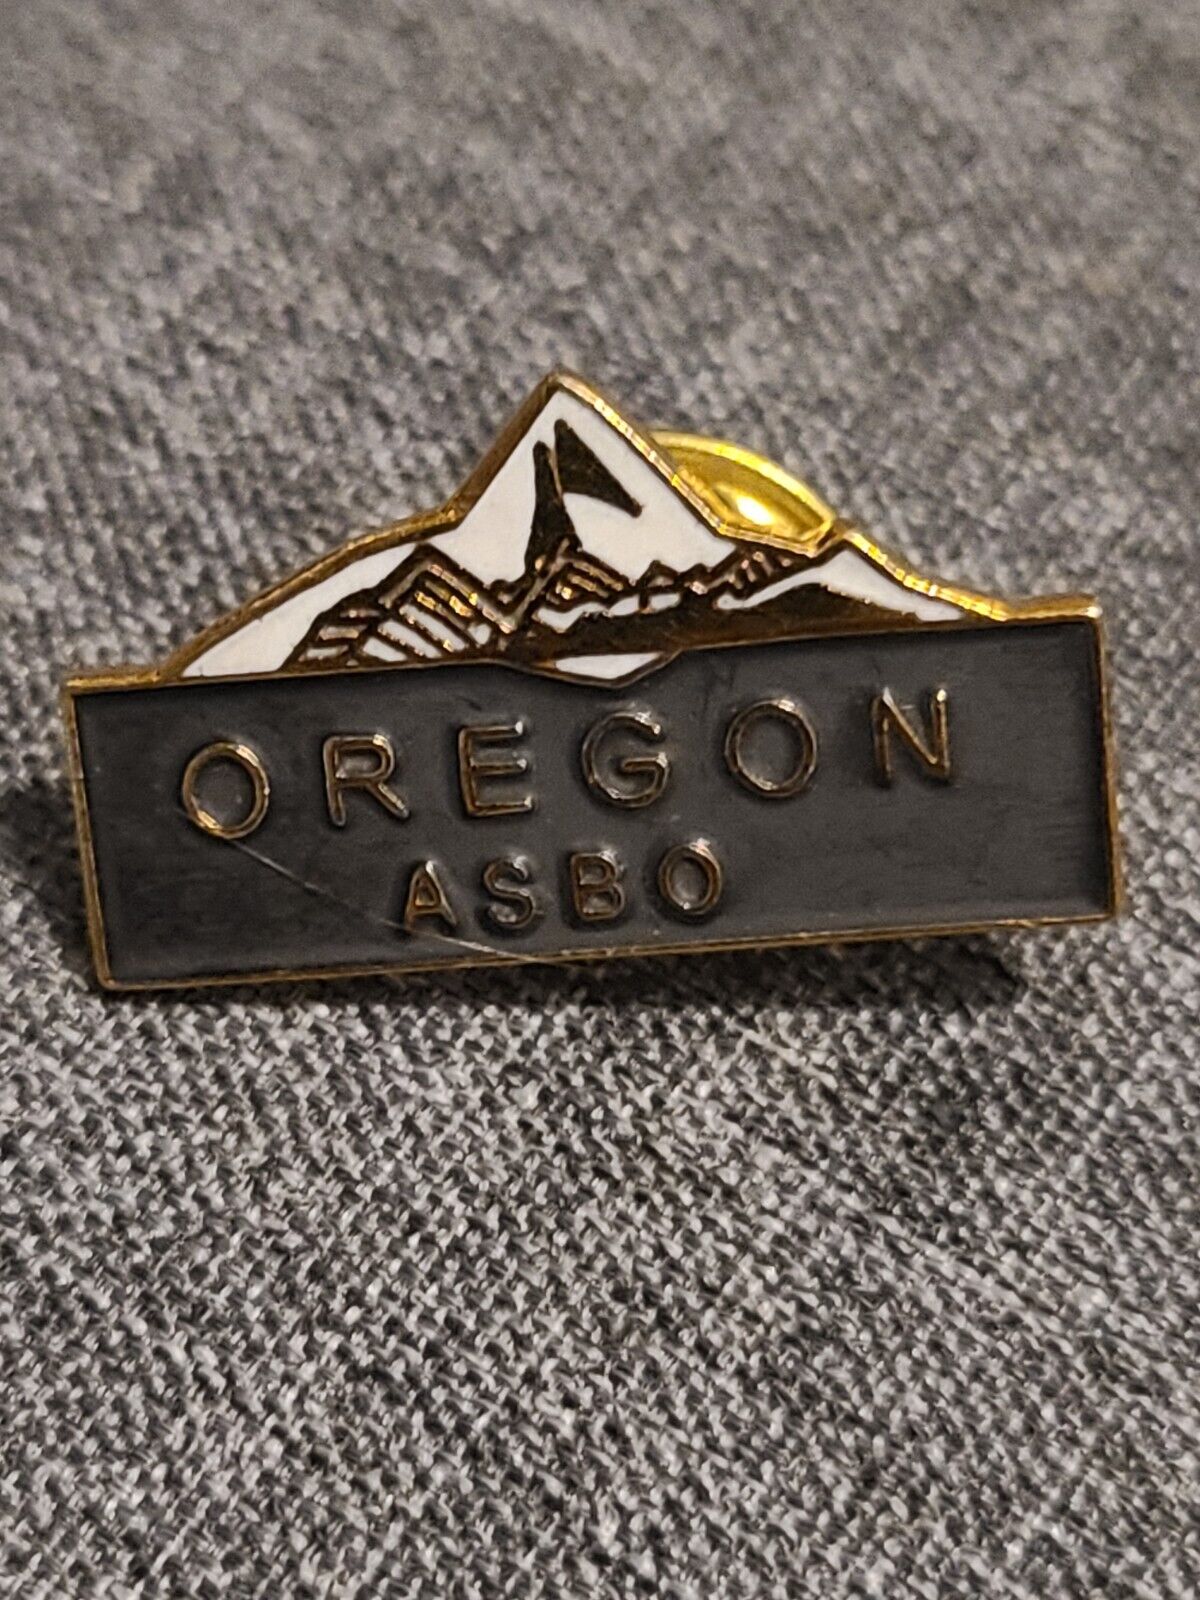 Oregon ASBO Lapel Pin 